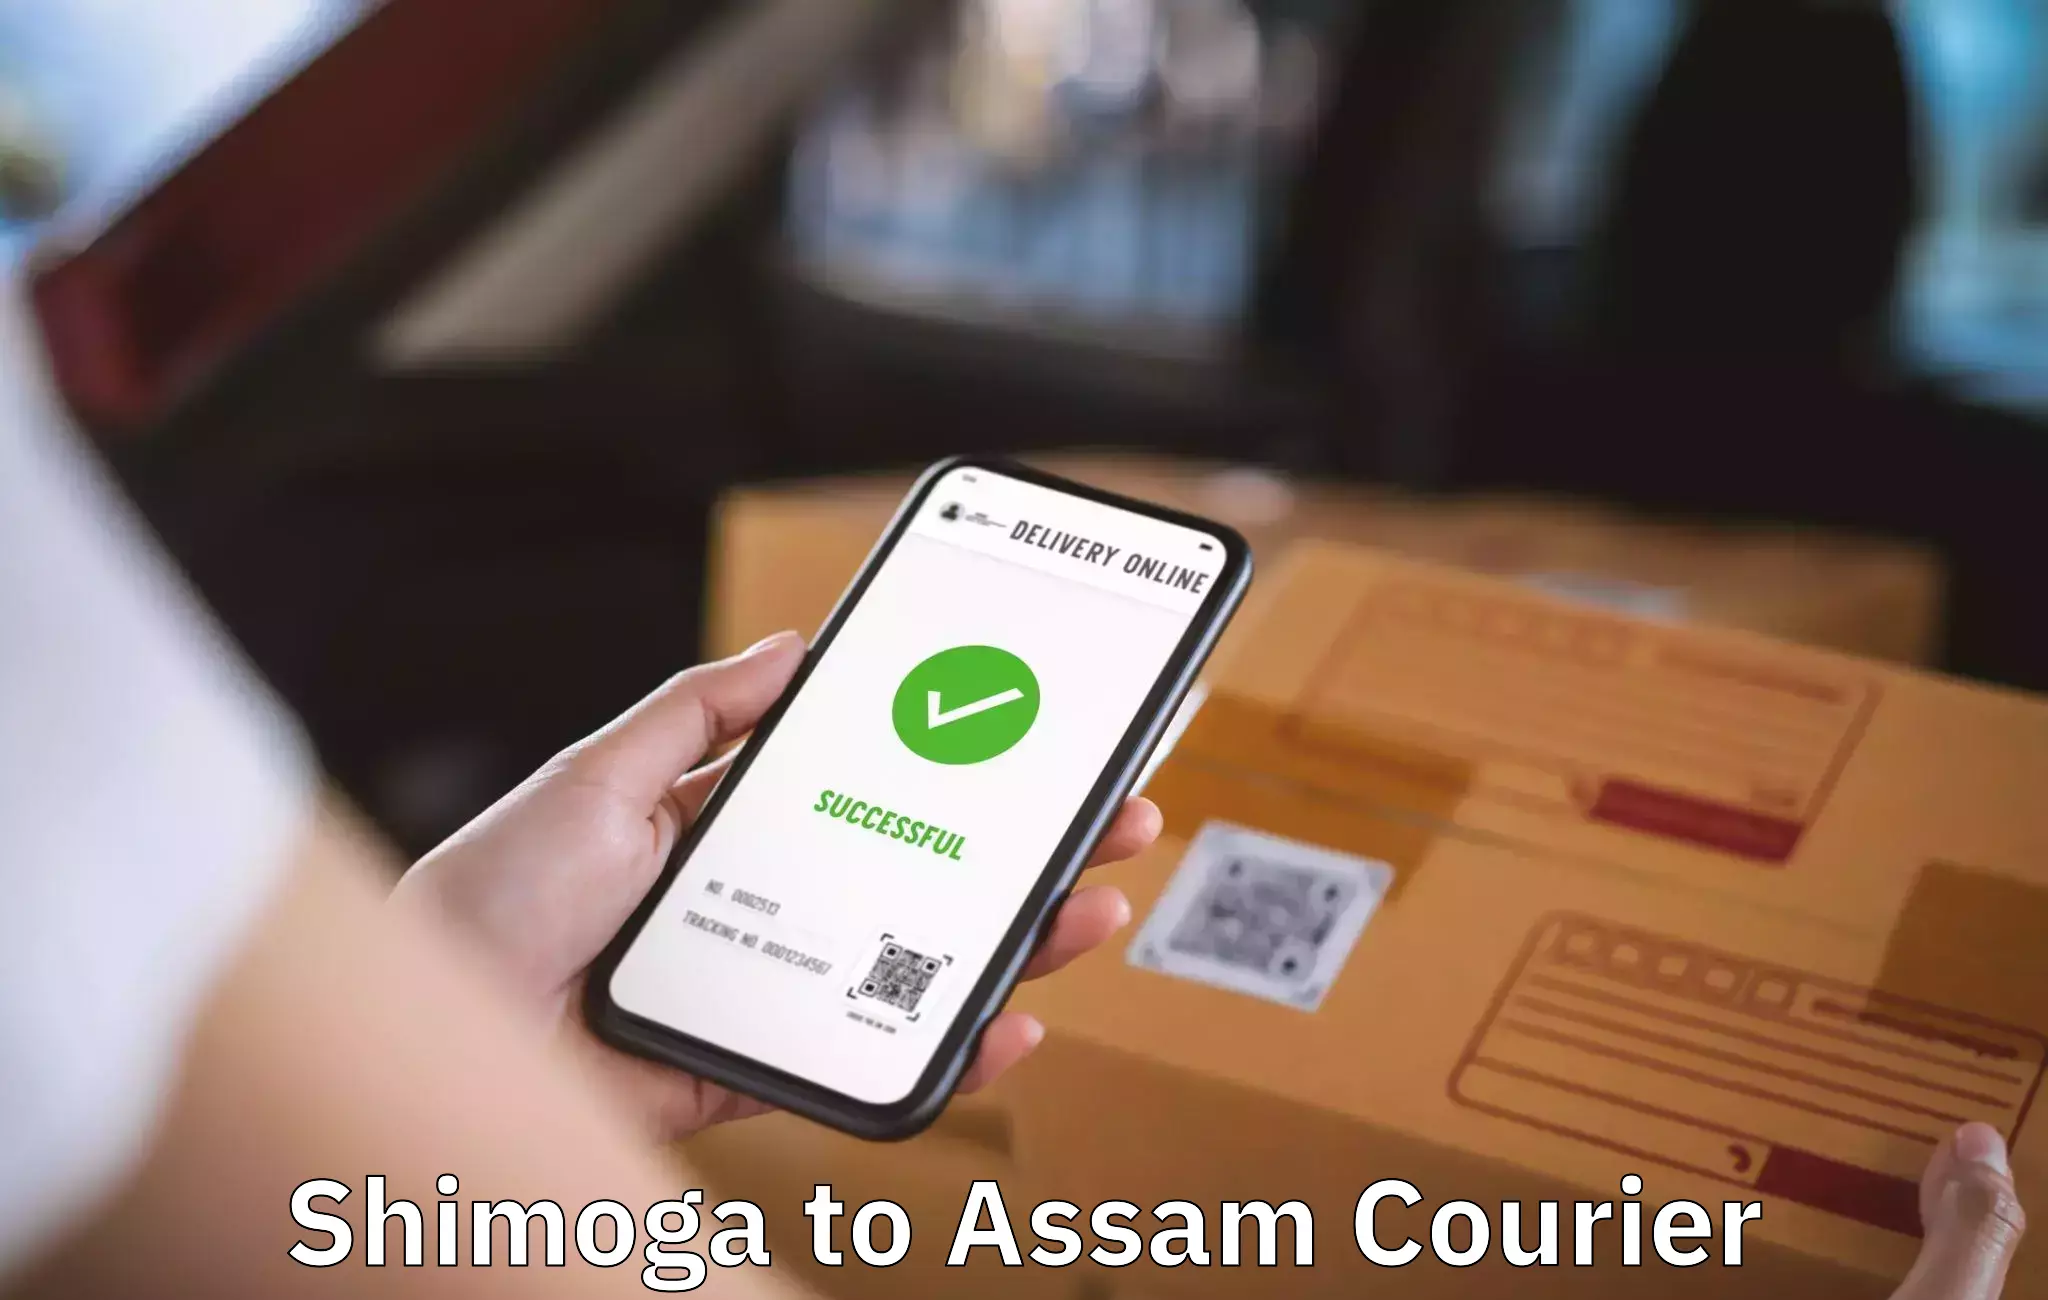 Trusted moving company Shimoga to Lala Assam